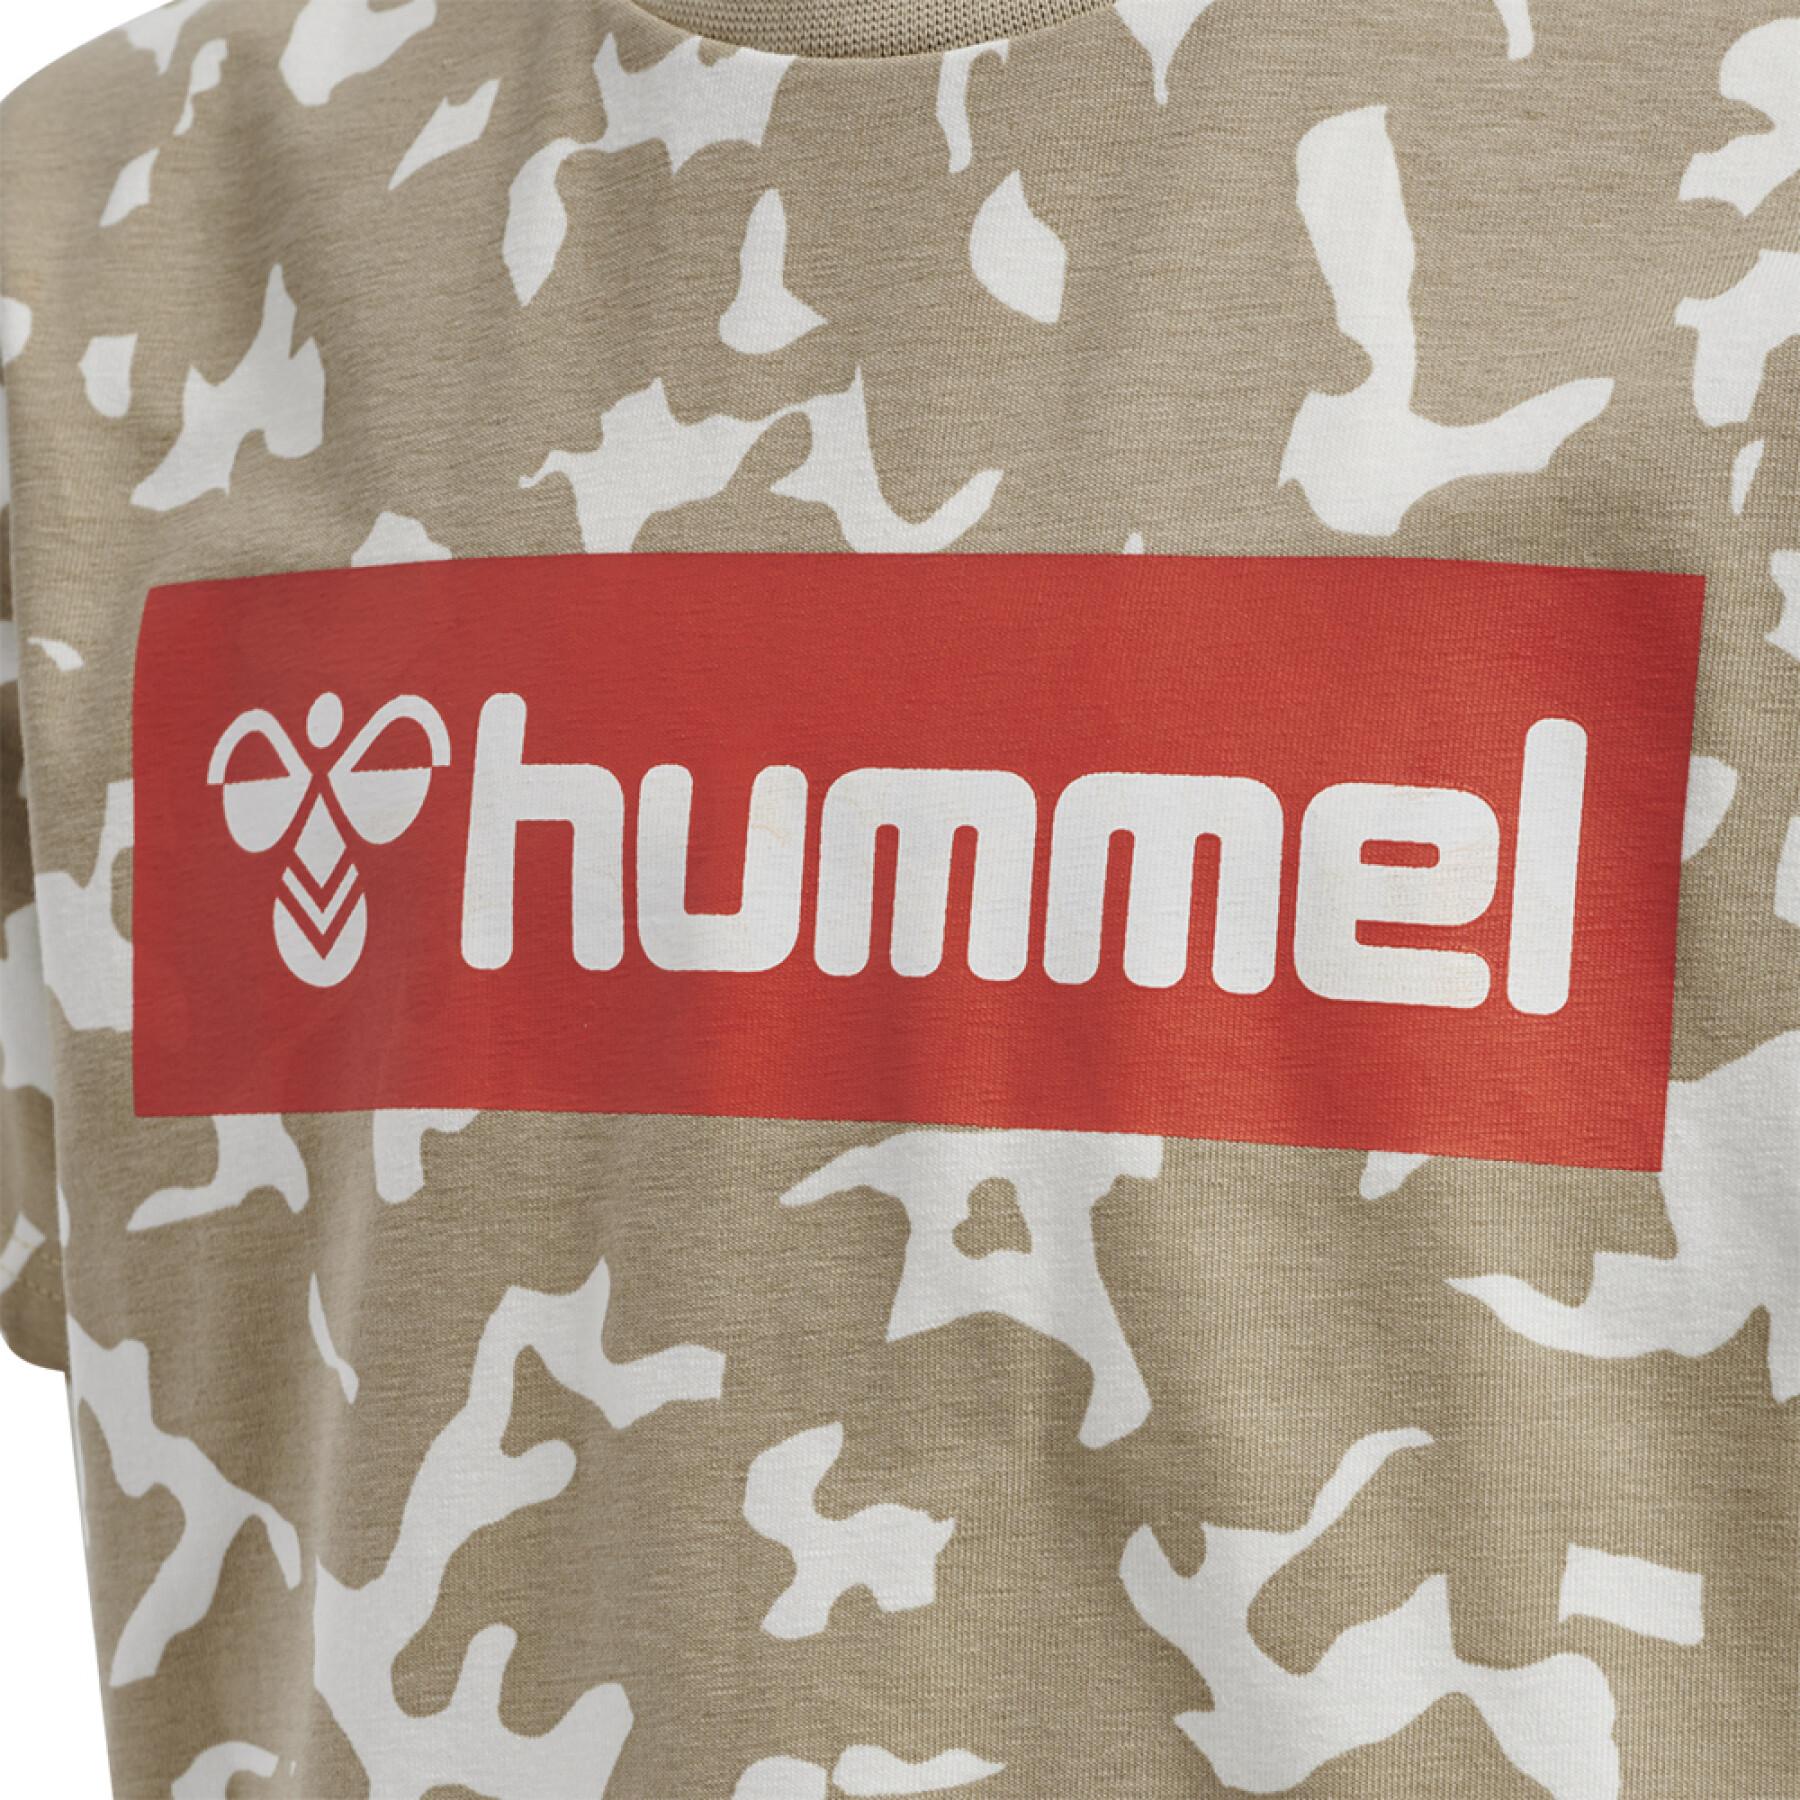 Maglietta per bambini Hummel hmlCarter